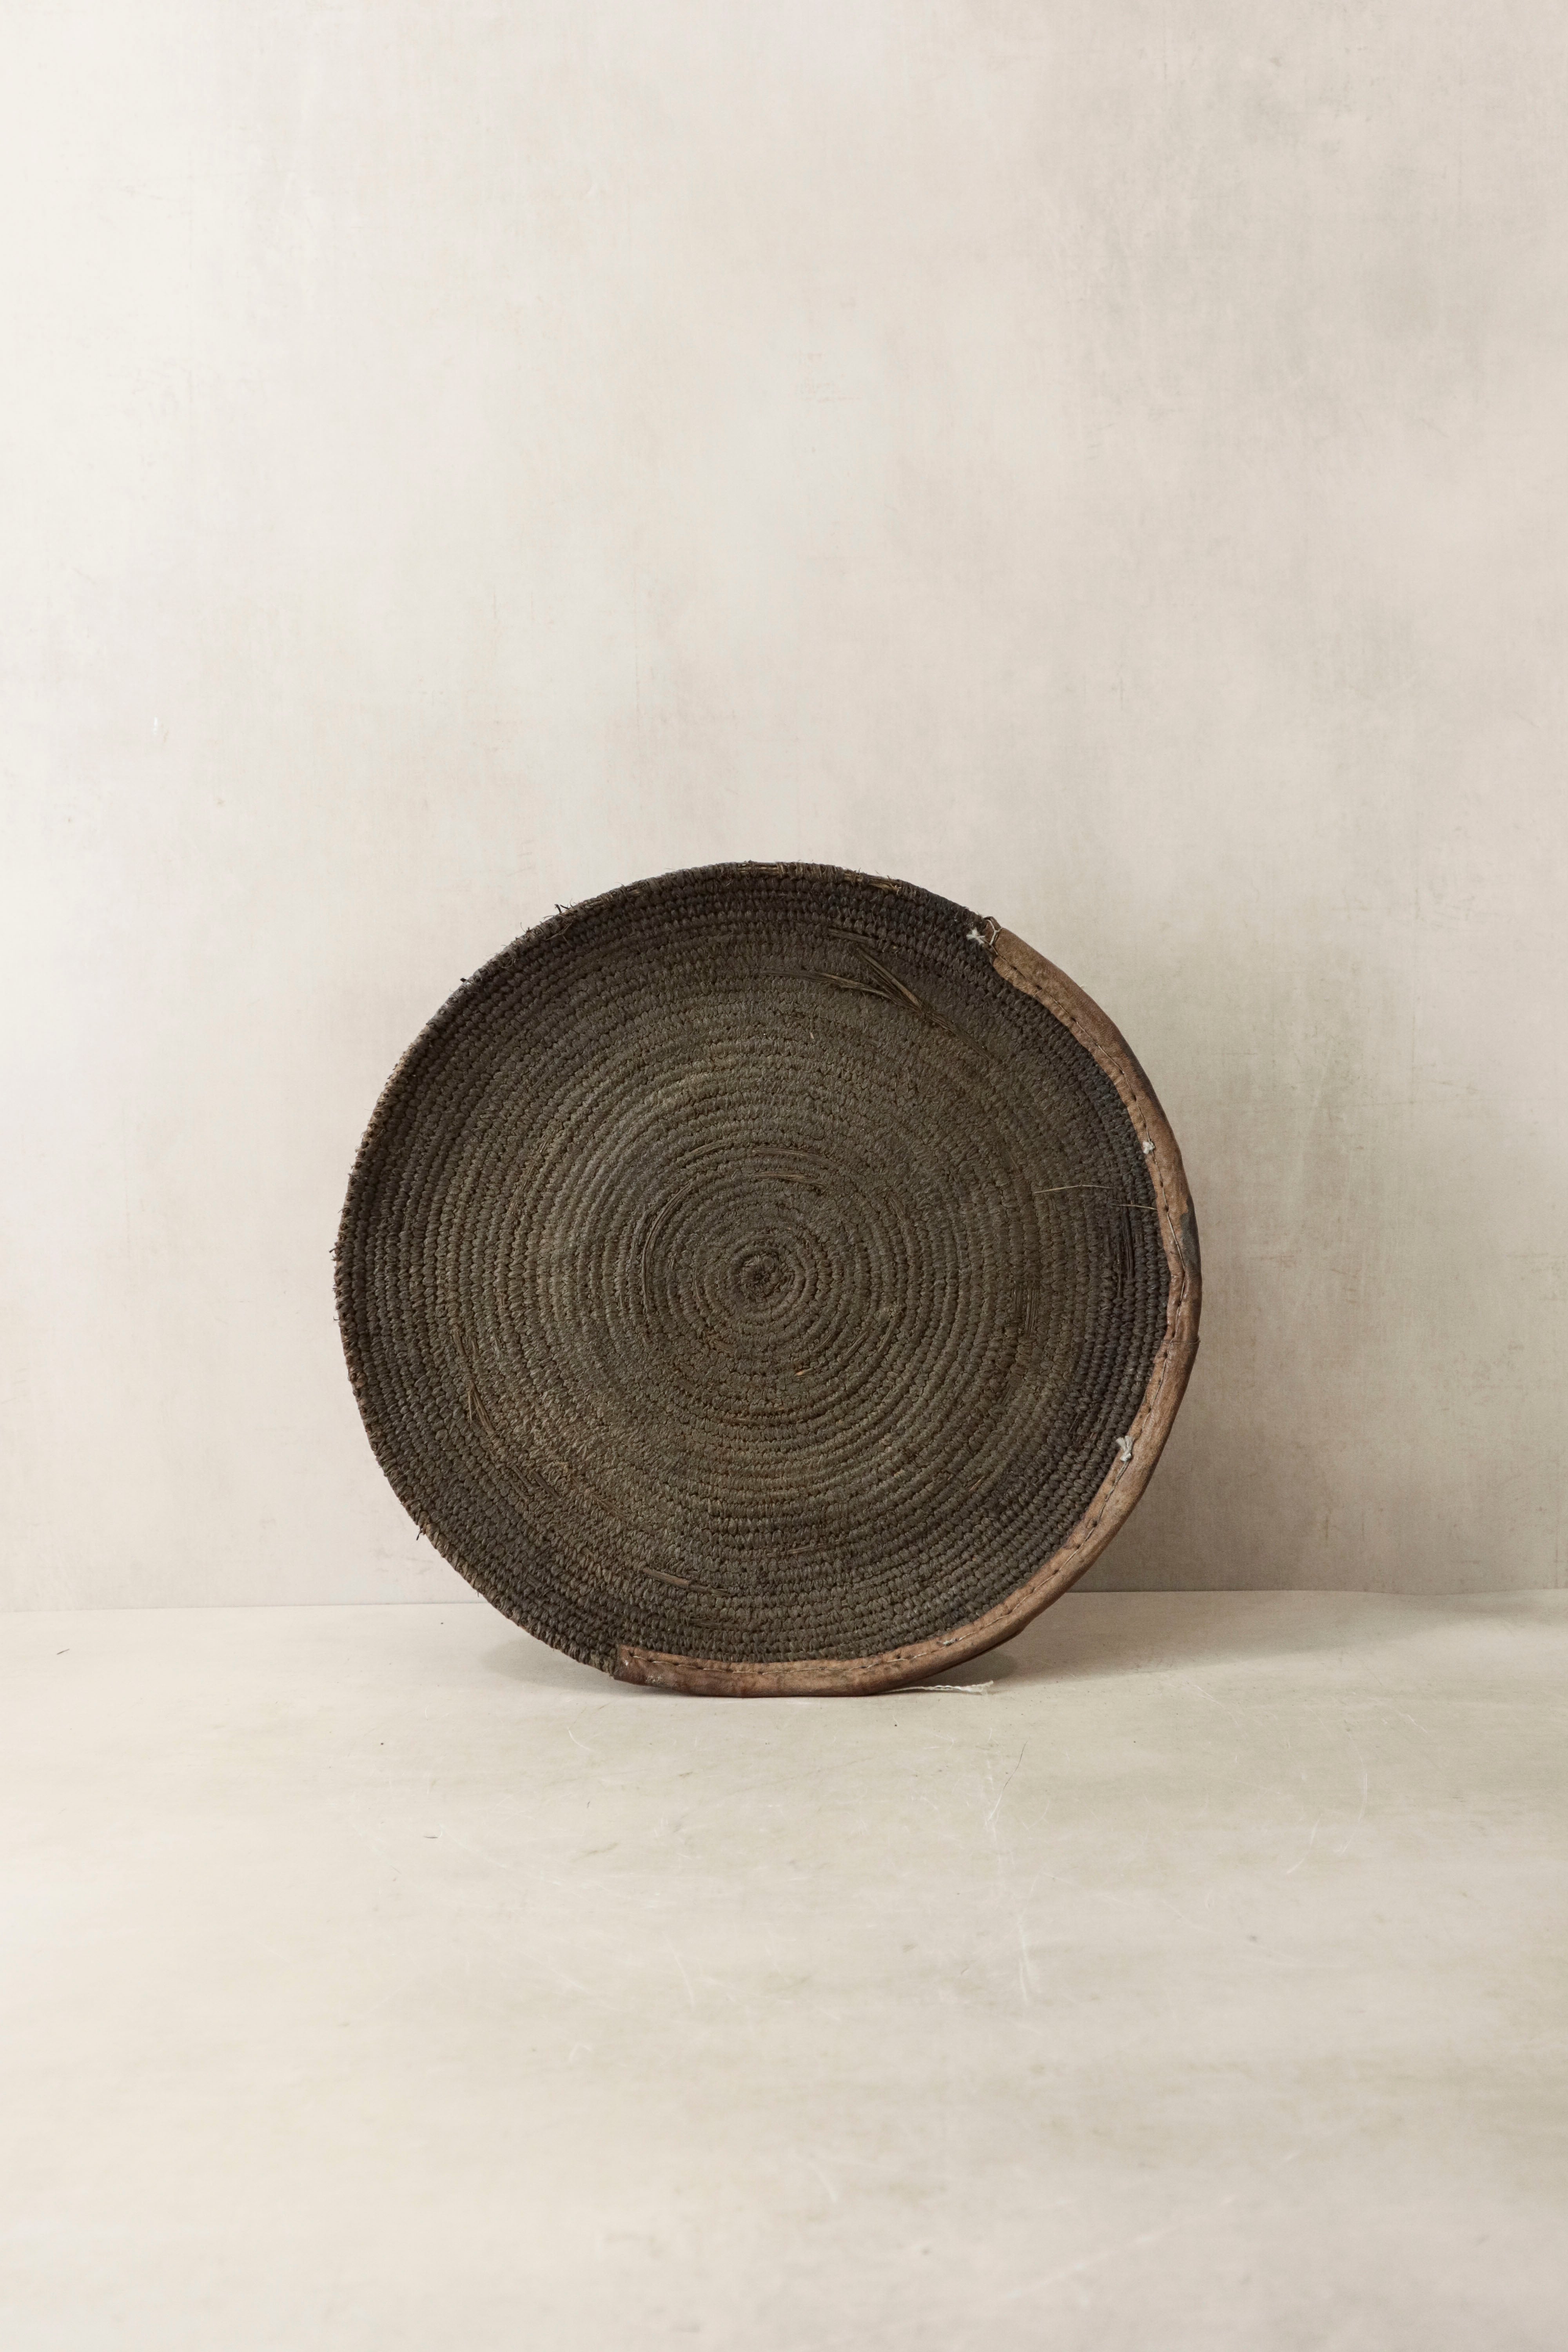 botanicalboysuk Handwoven Wall Basket - Chad - 41.4